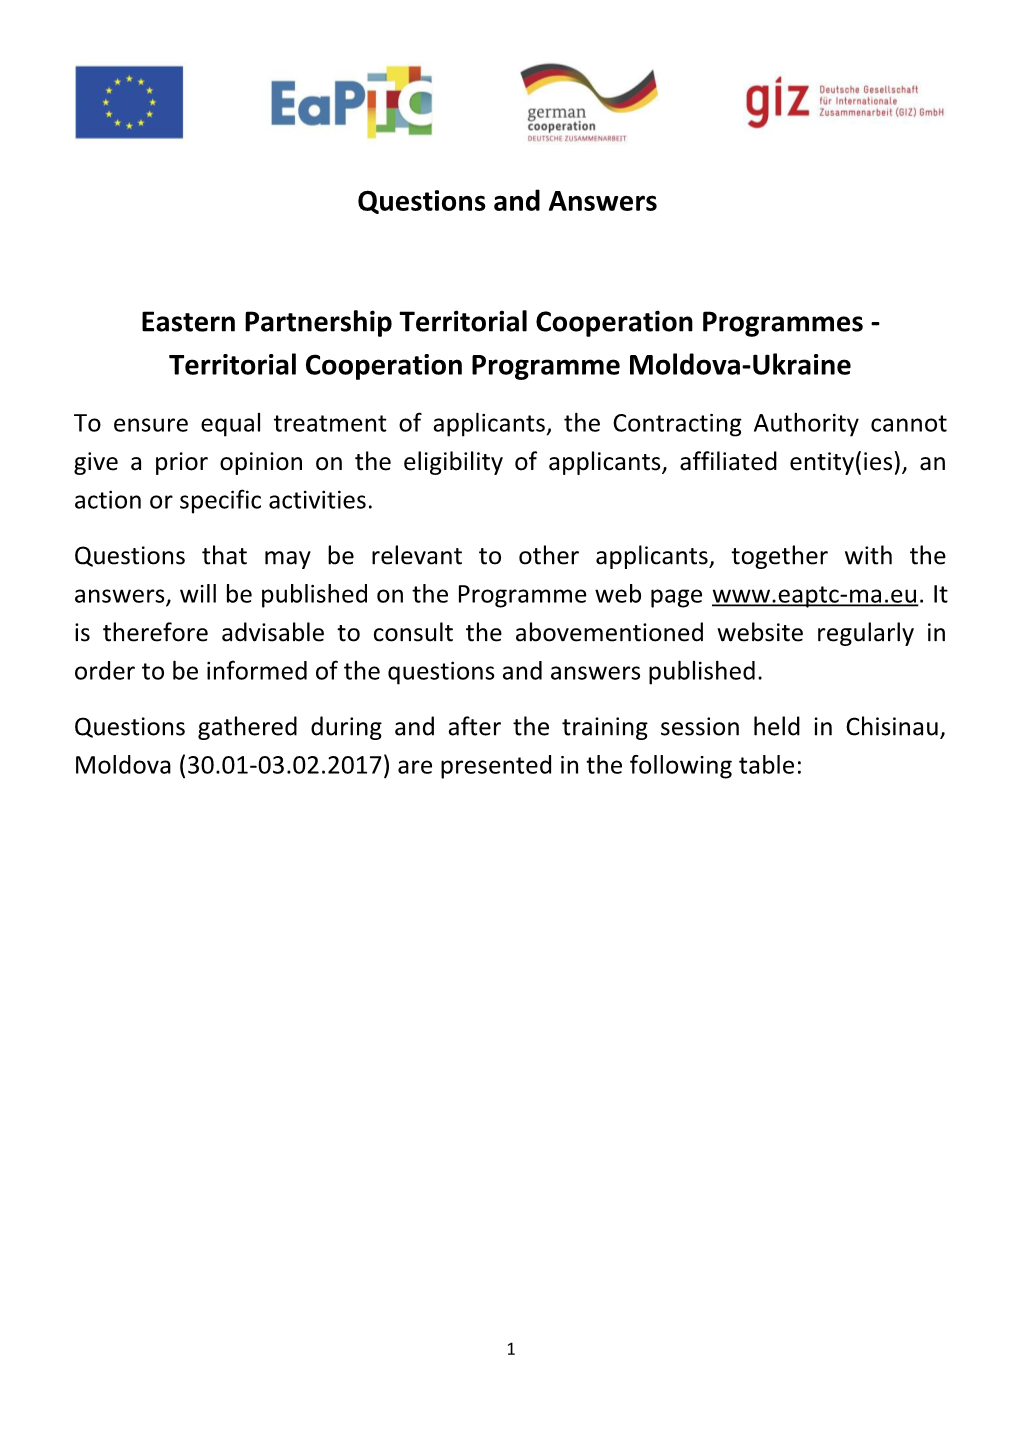 Eastern Partnership Territorial Cooperation Programmes - Territorial Cooperation Programme